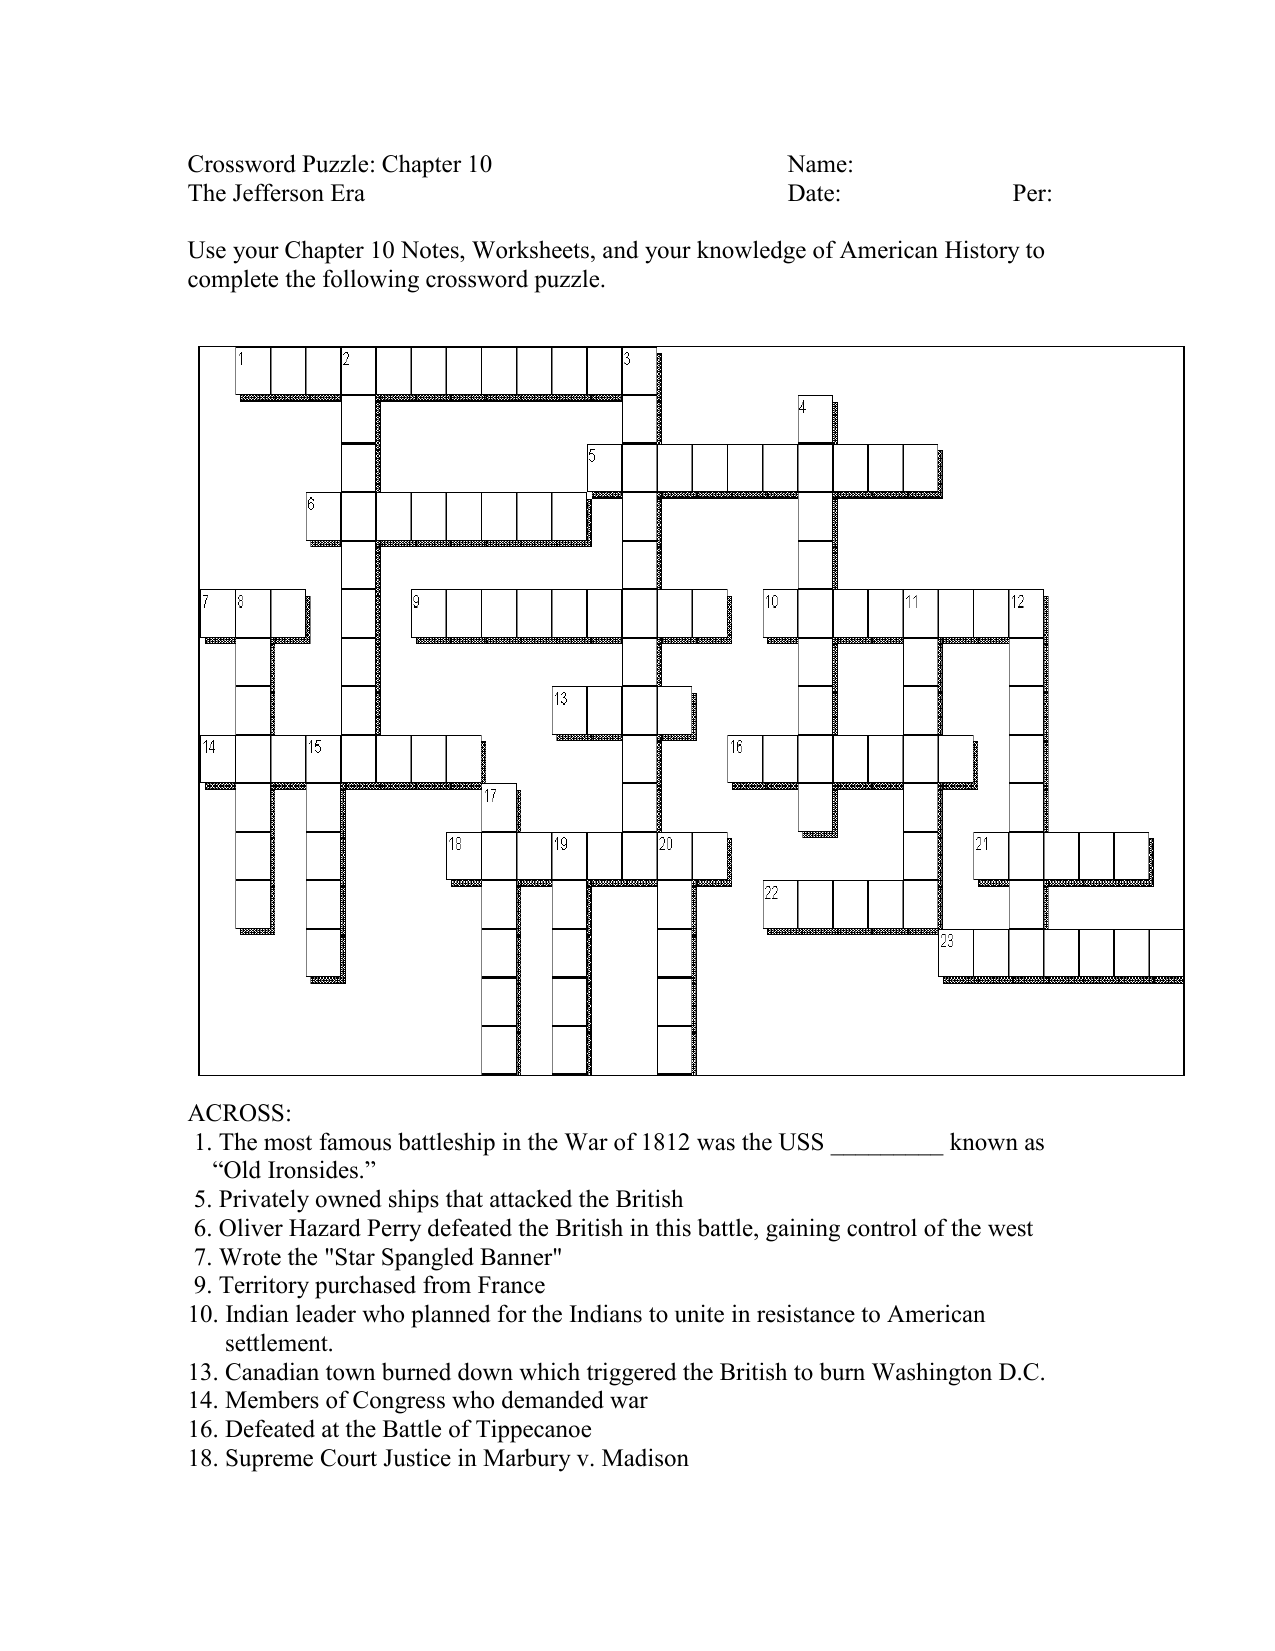 crossword-puzzle-chapter-11